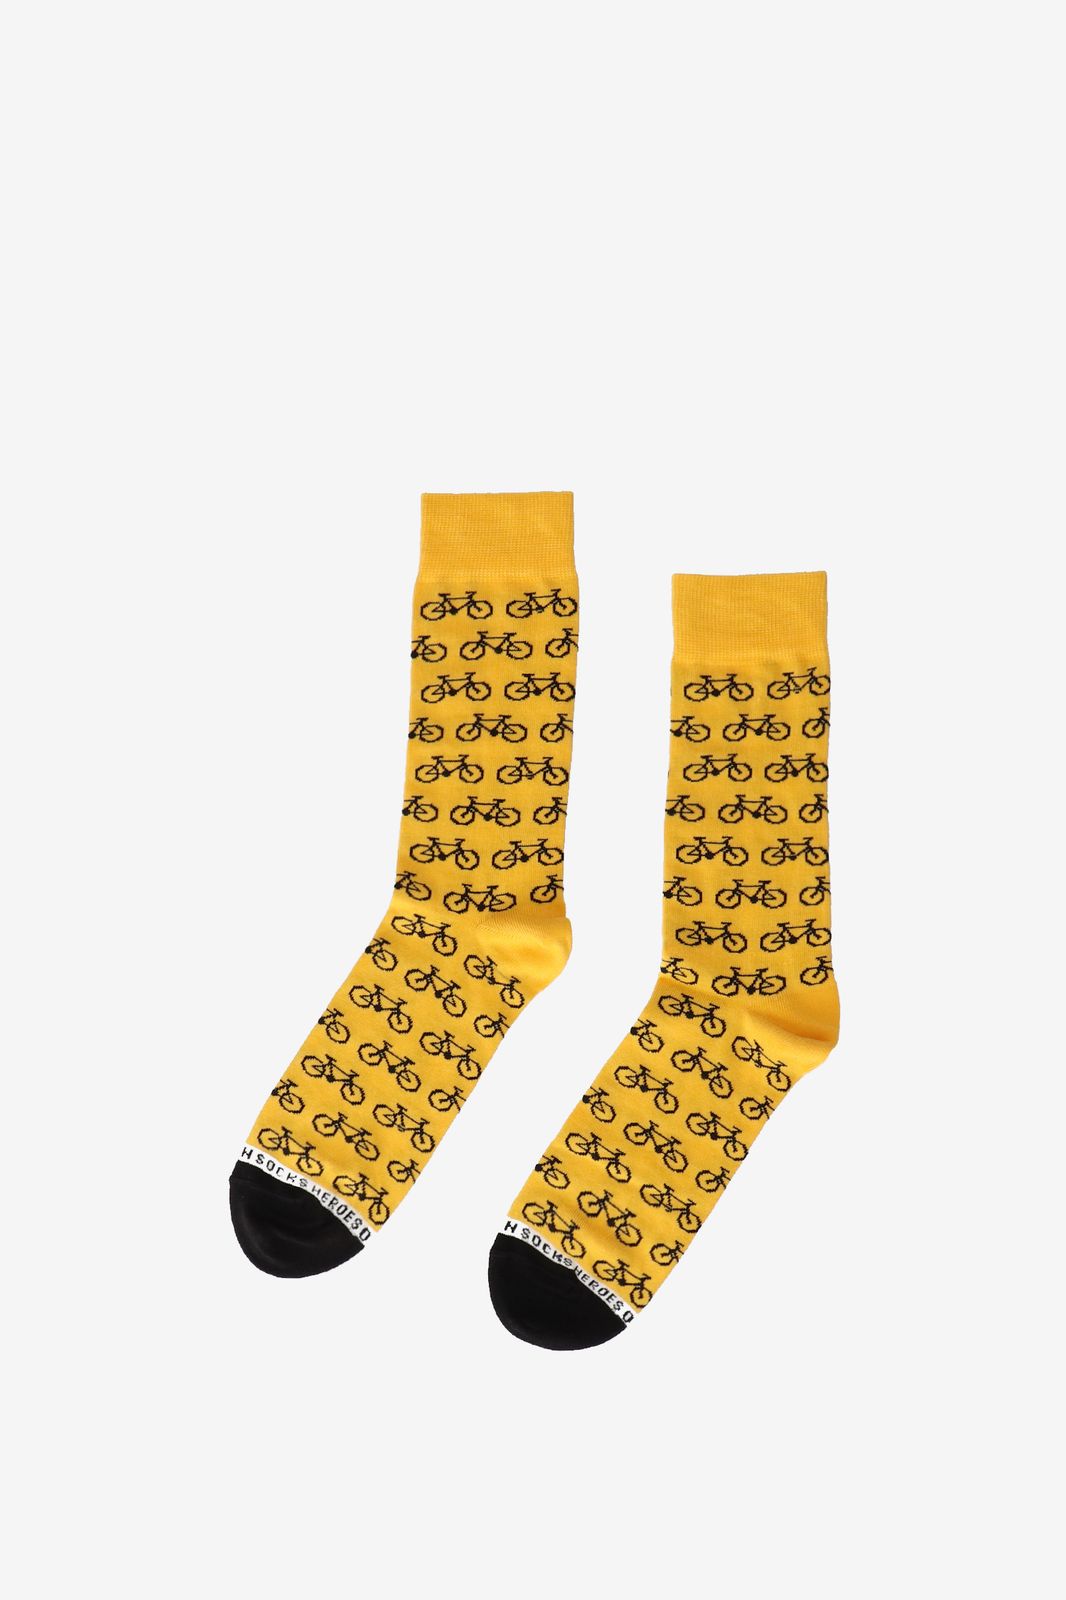 Heroes on Socks Socken mit Fahrrad-Print - gelb